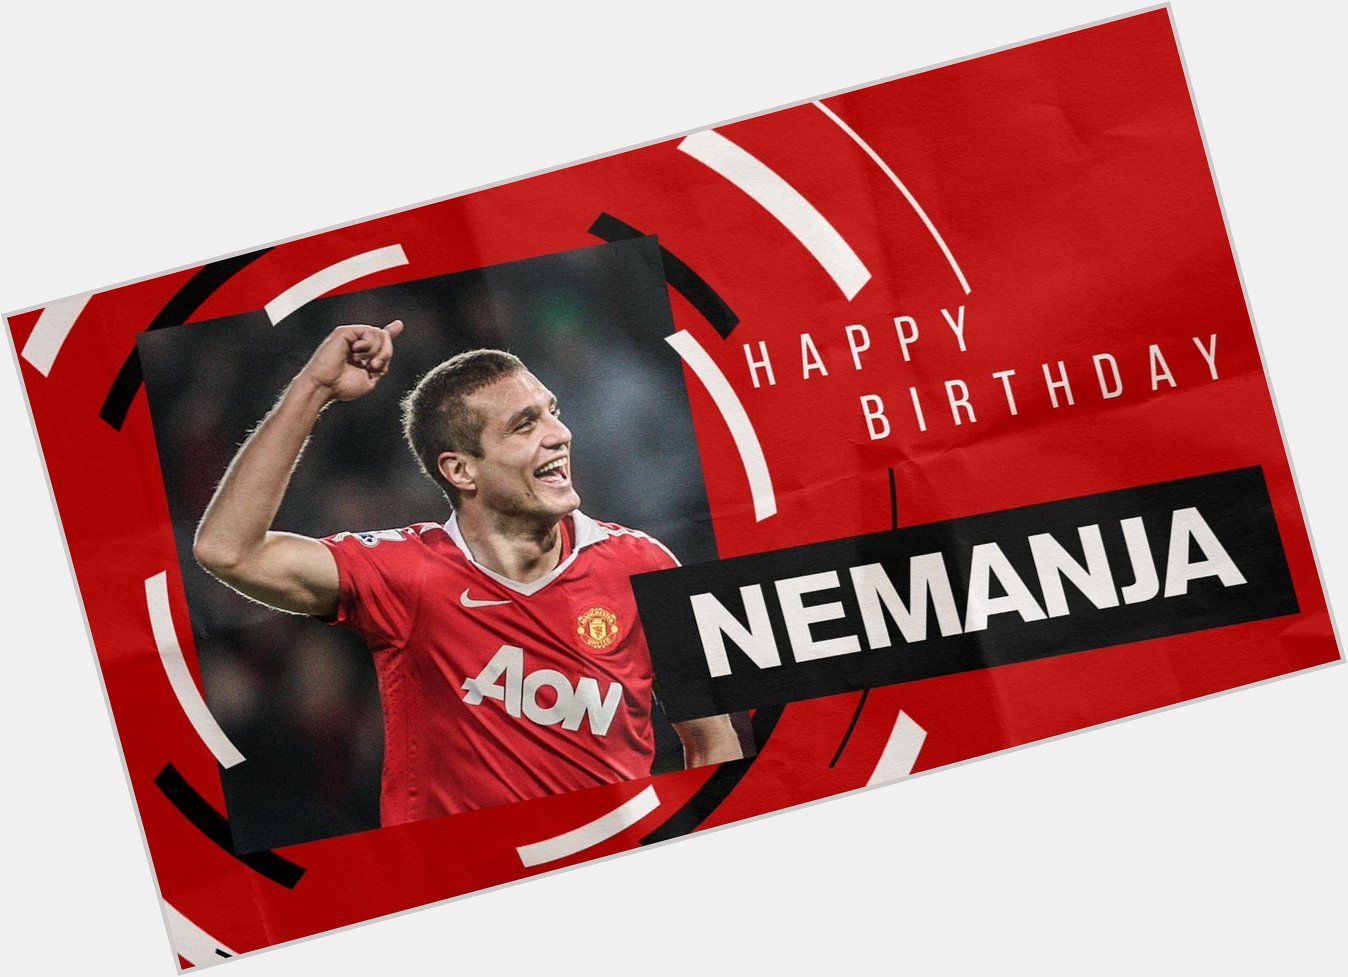 Happy birthday Nemanja Vidic .
.
.    